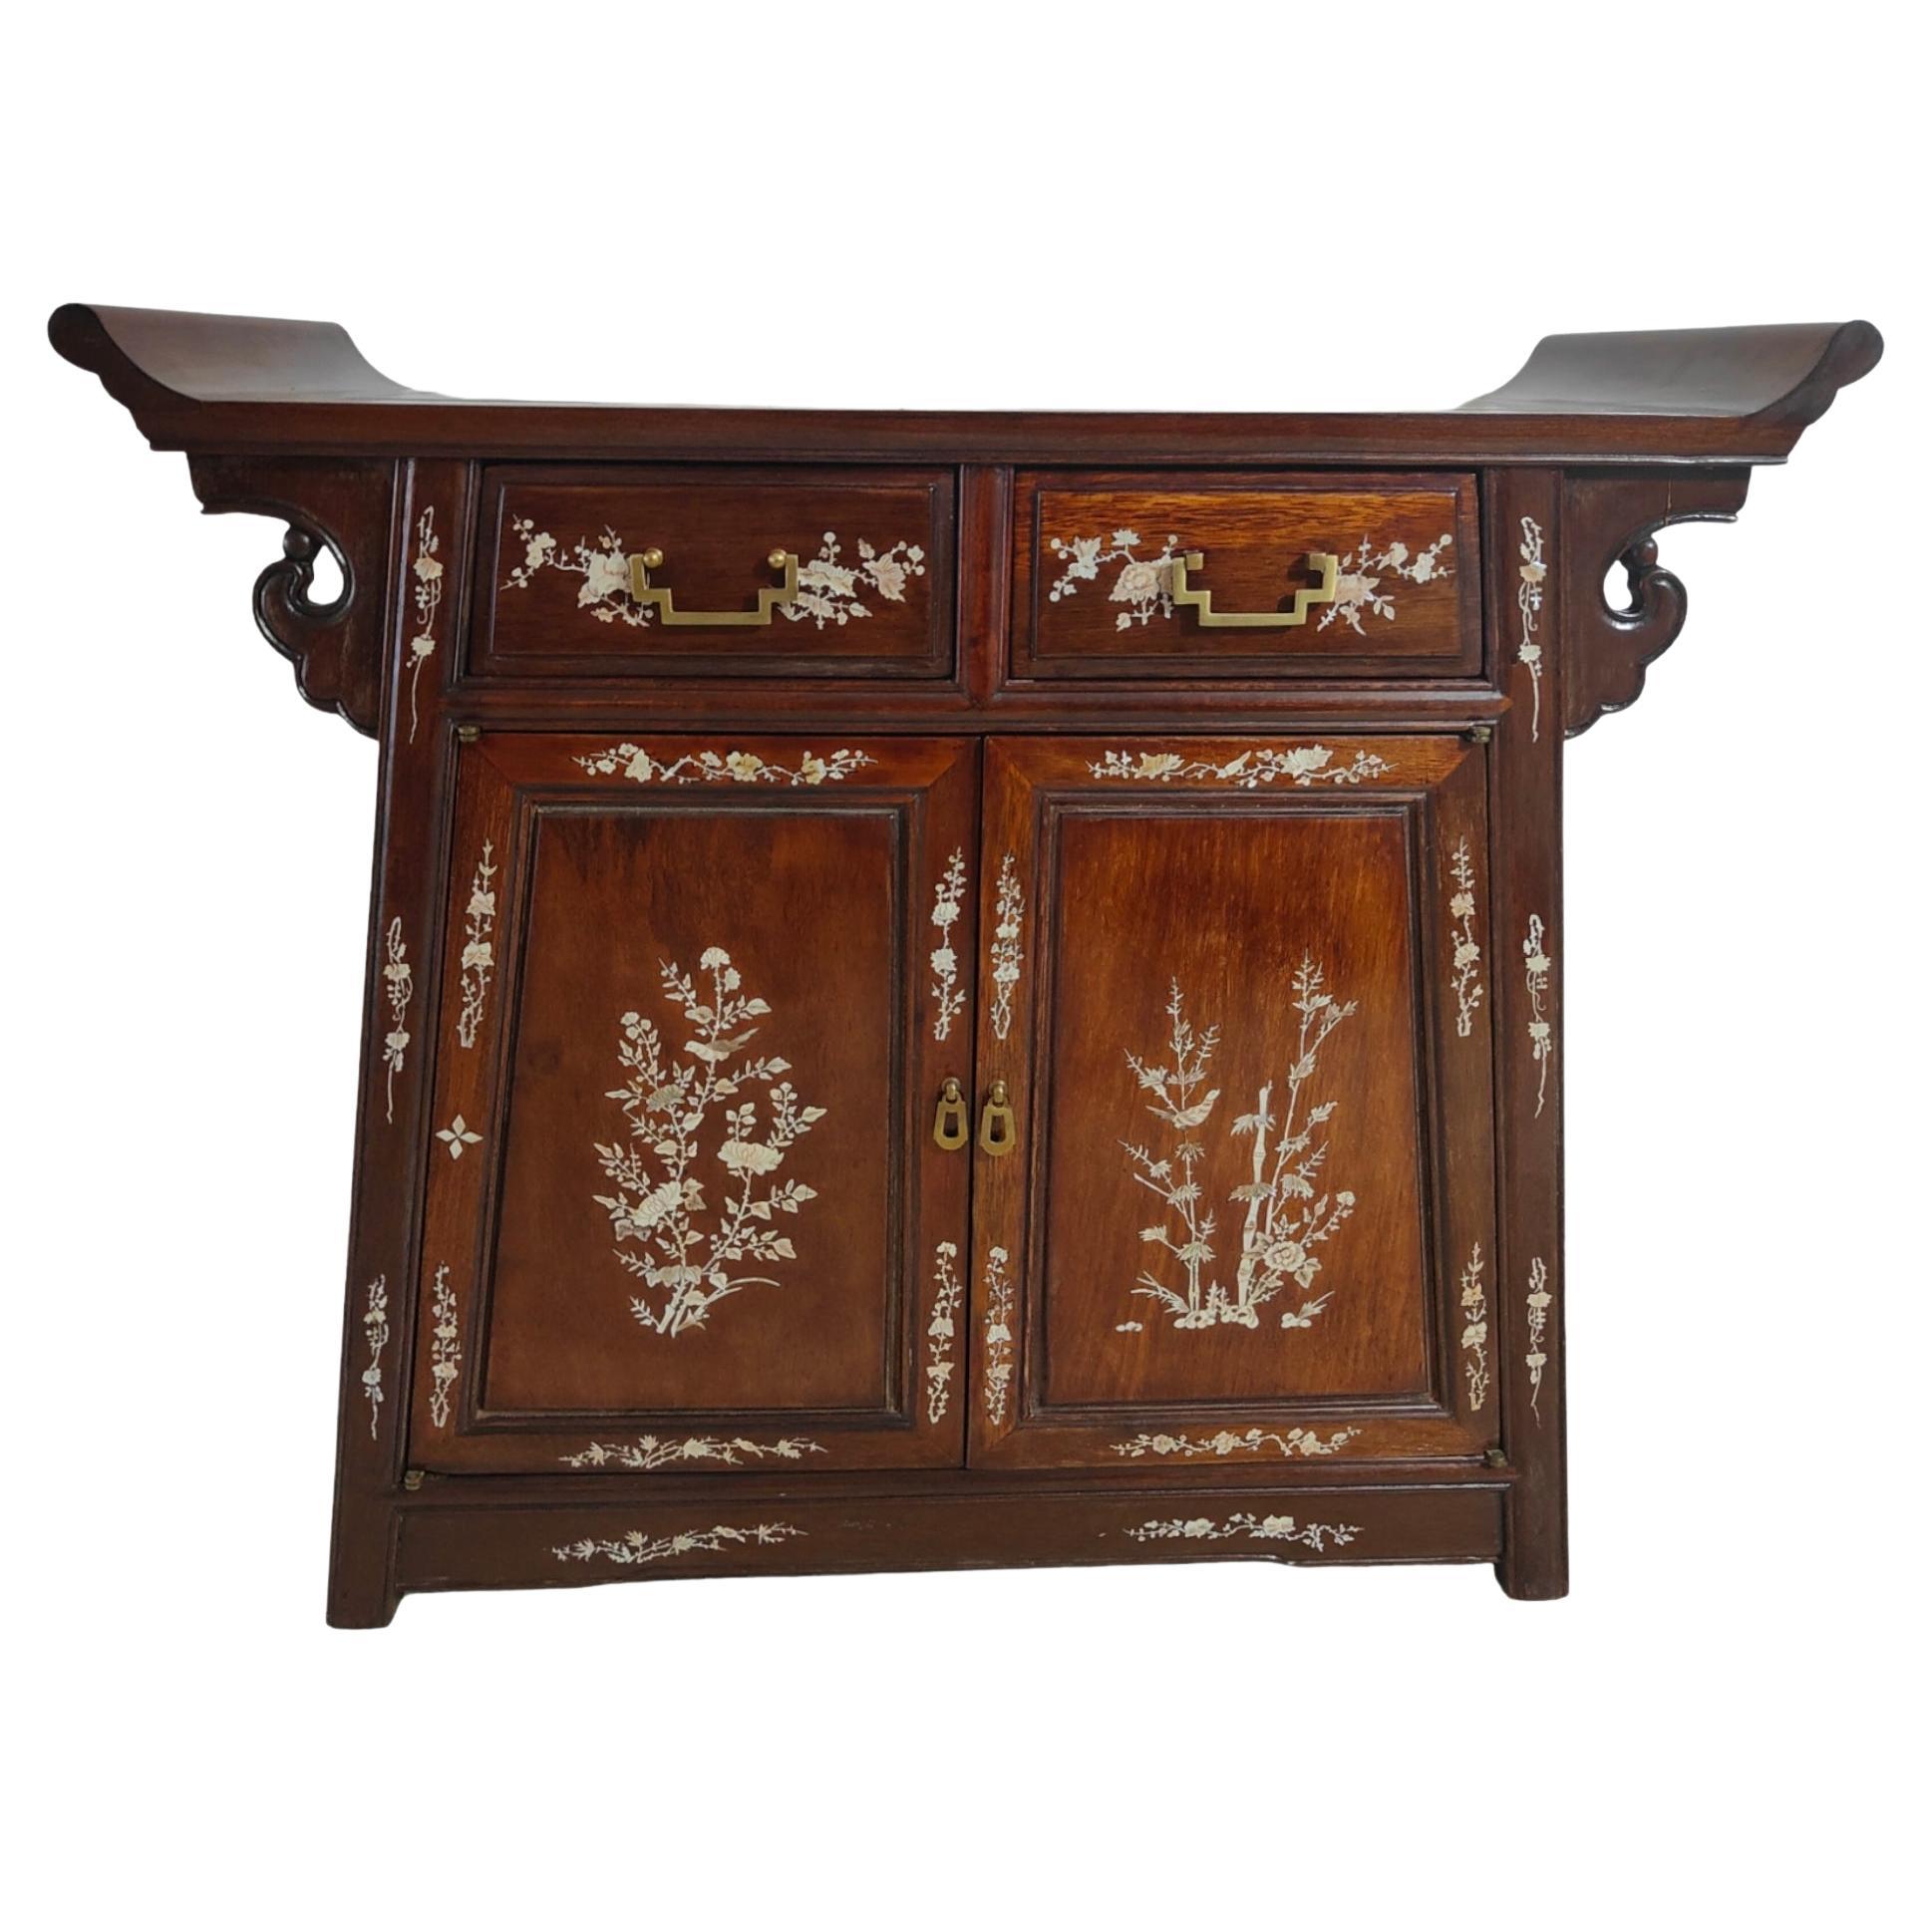 19th Century Chinese Furniture BUFFET